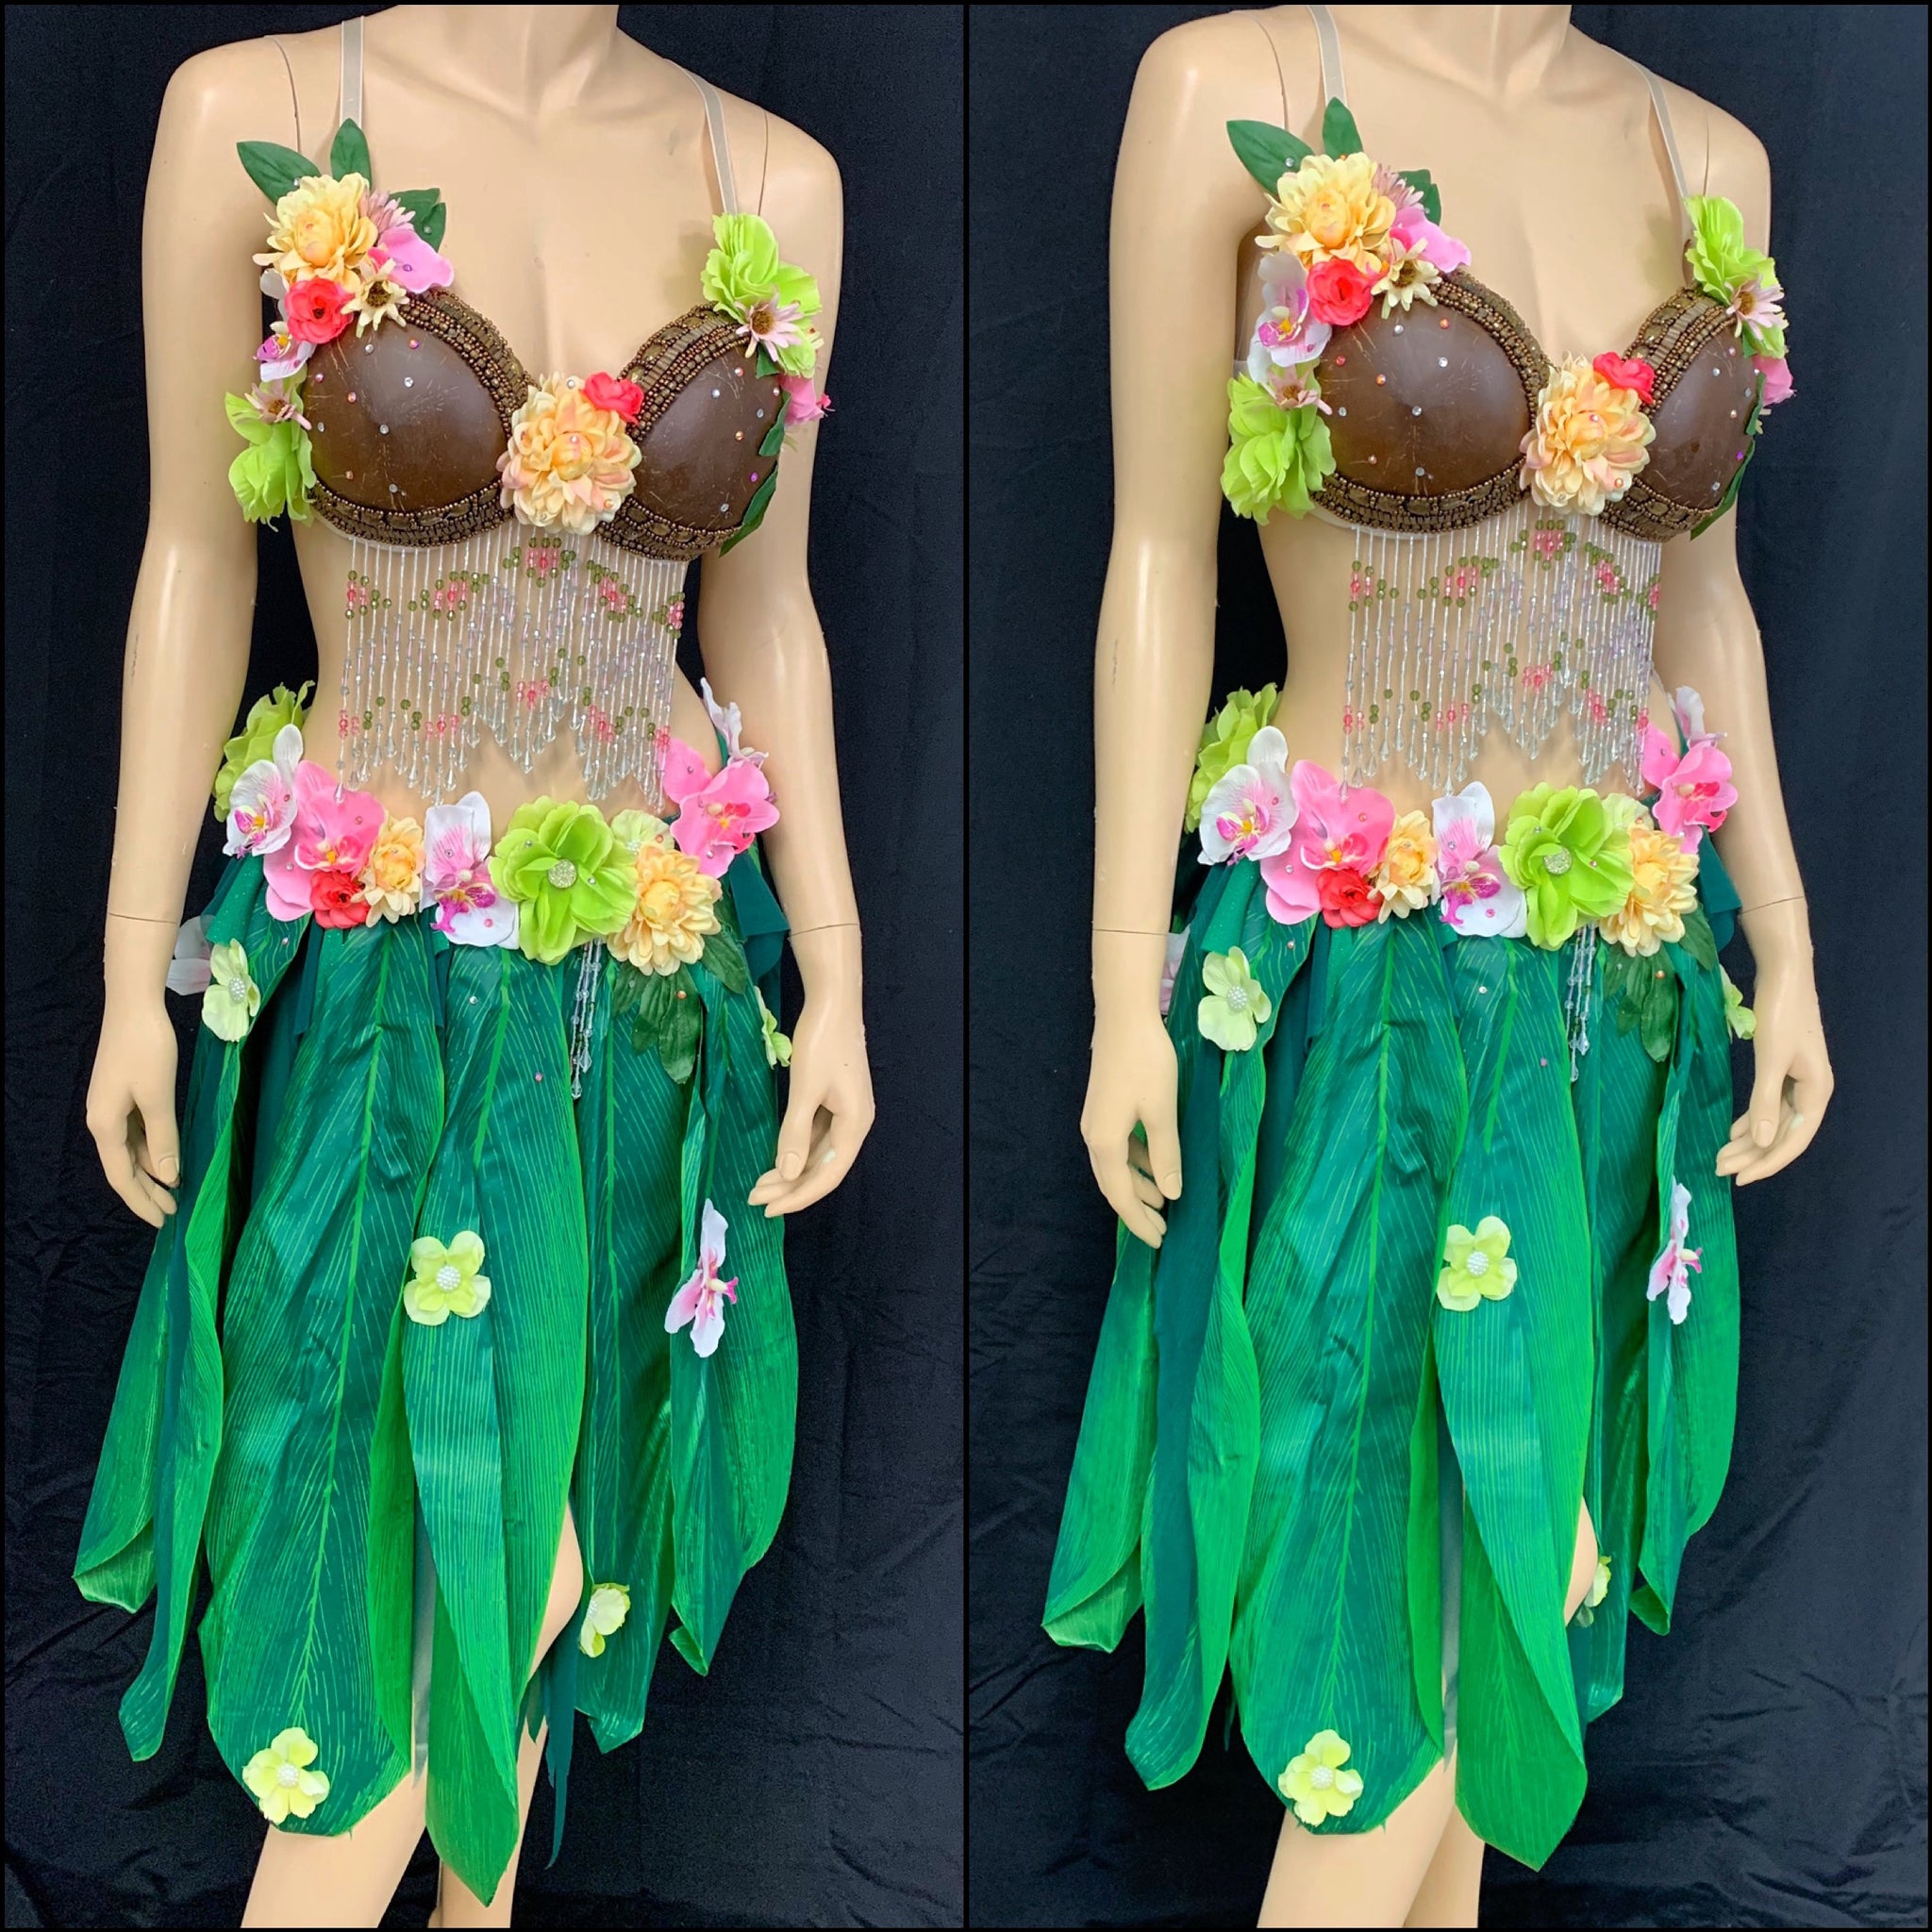 Hula Skirt Set with Coconut Bra